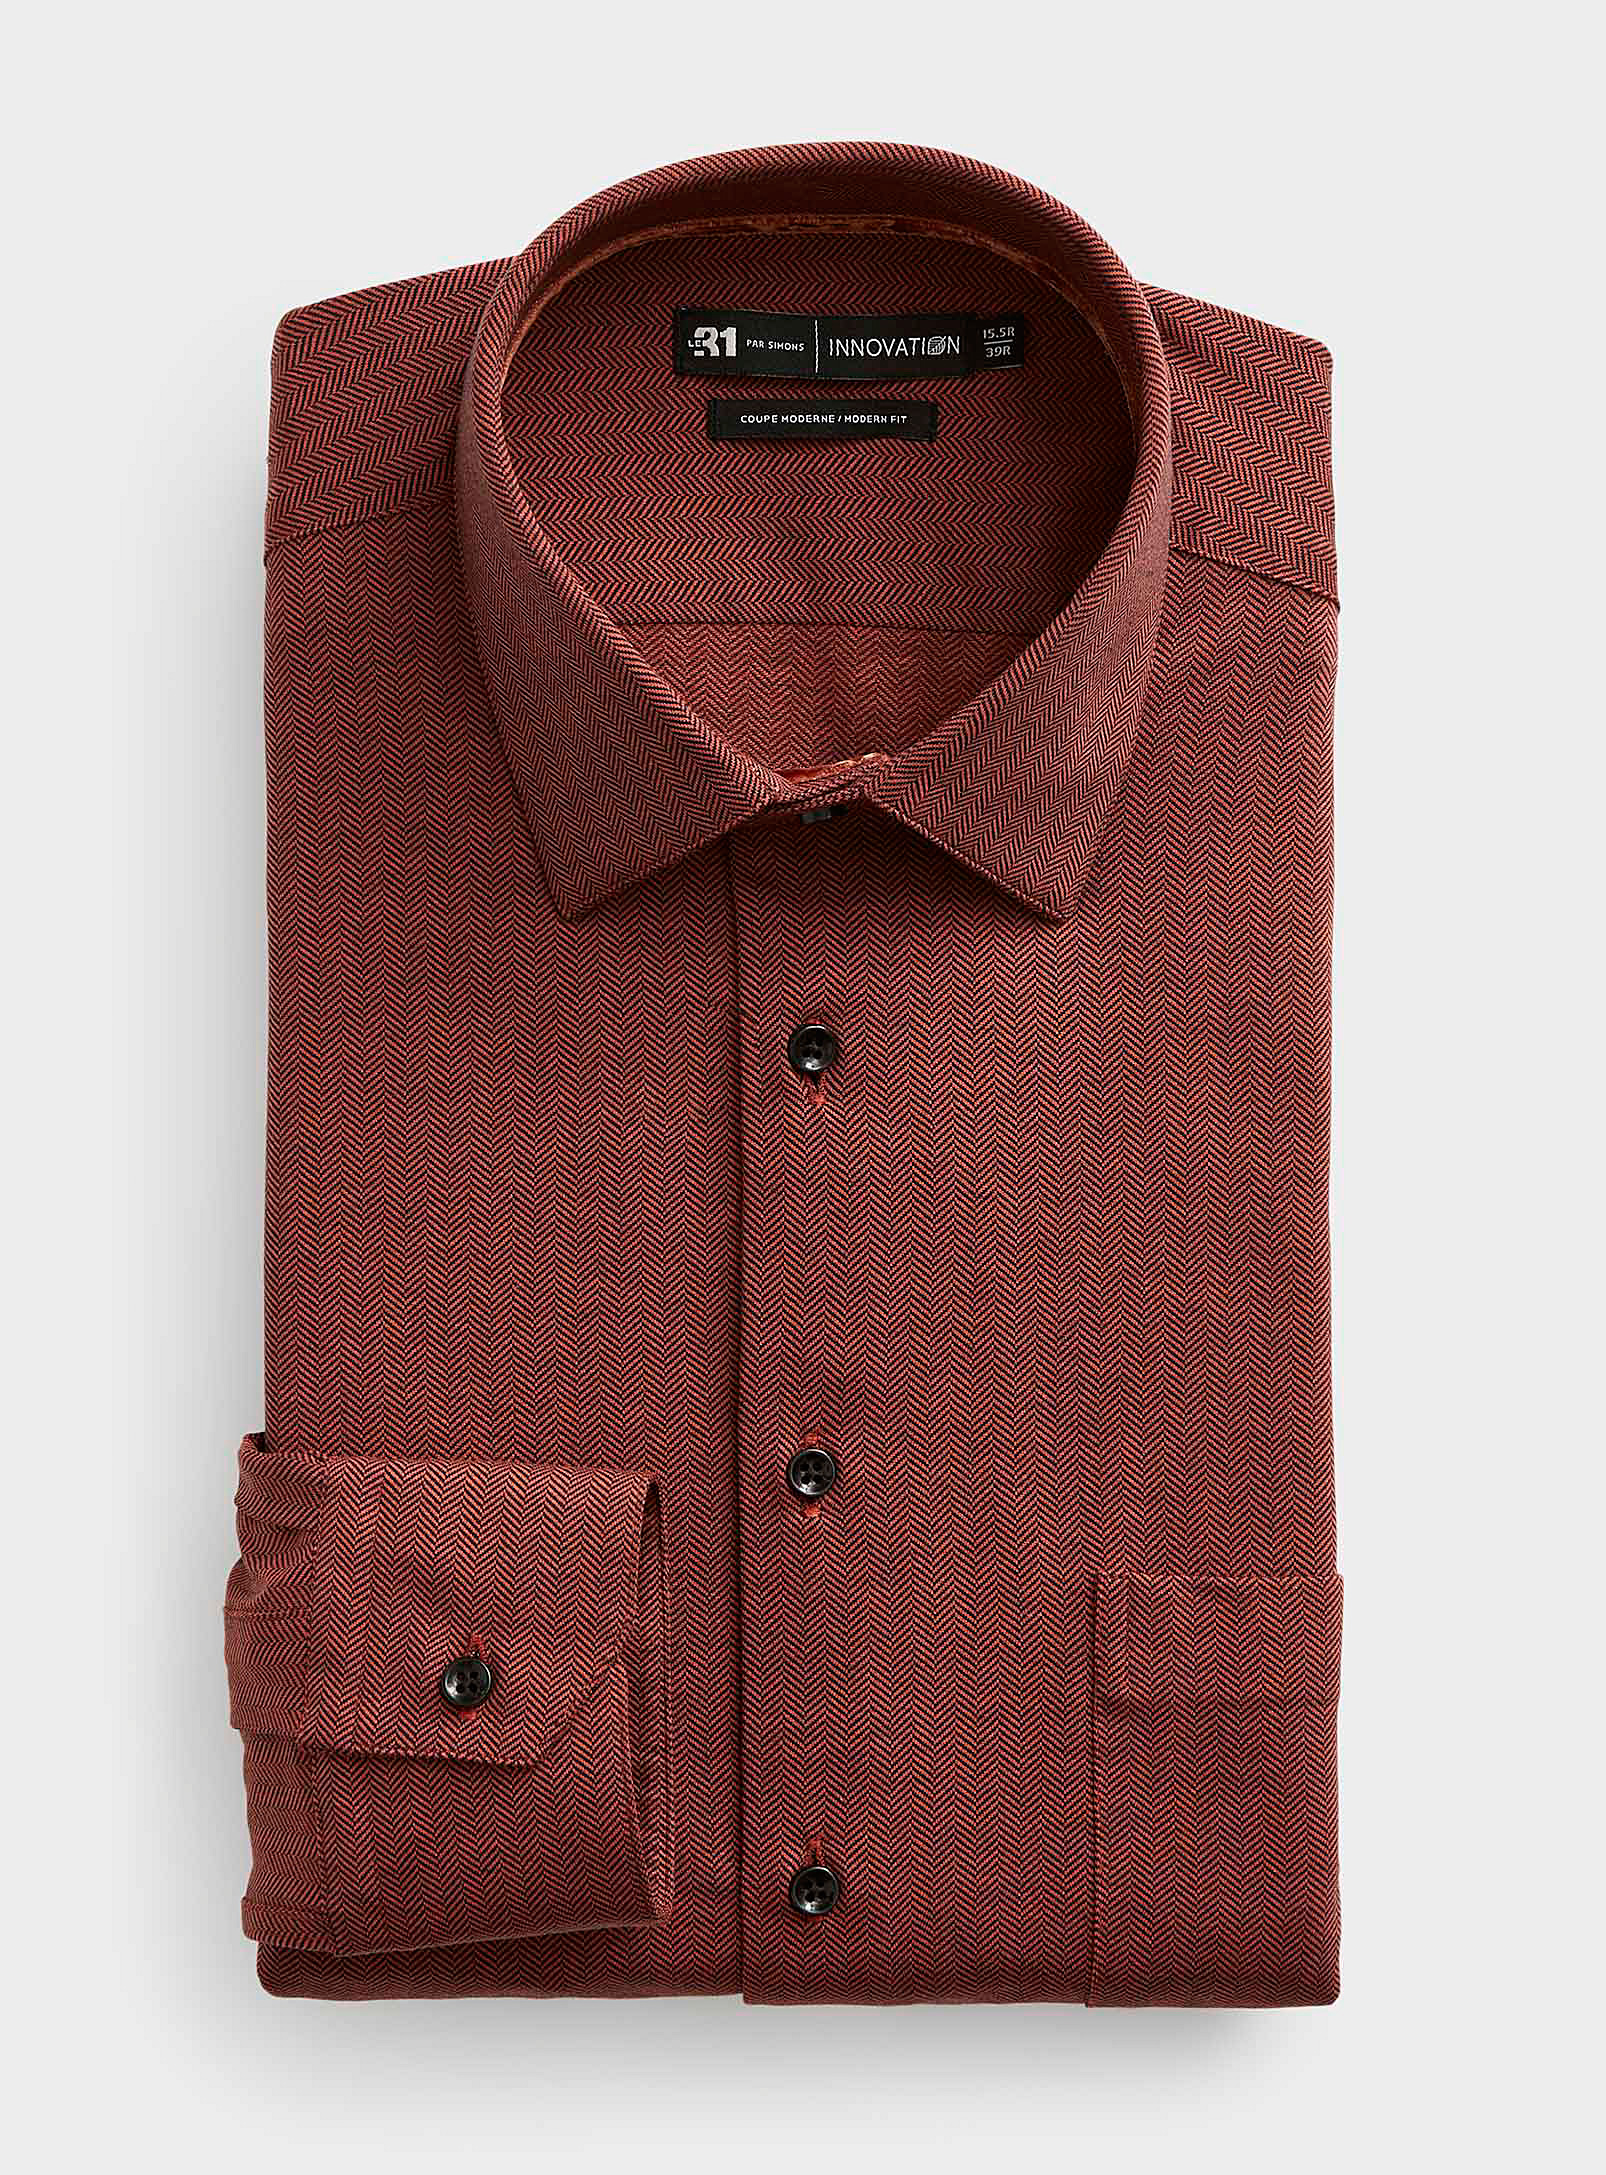 Colourful accent herringbone tweed jacket Semi-slim fit, Le 31, Shop  Men's Semi-Slim Fit Jackets & Blazers